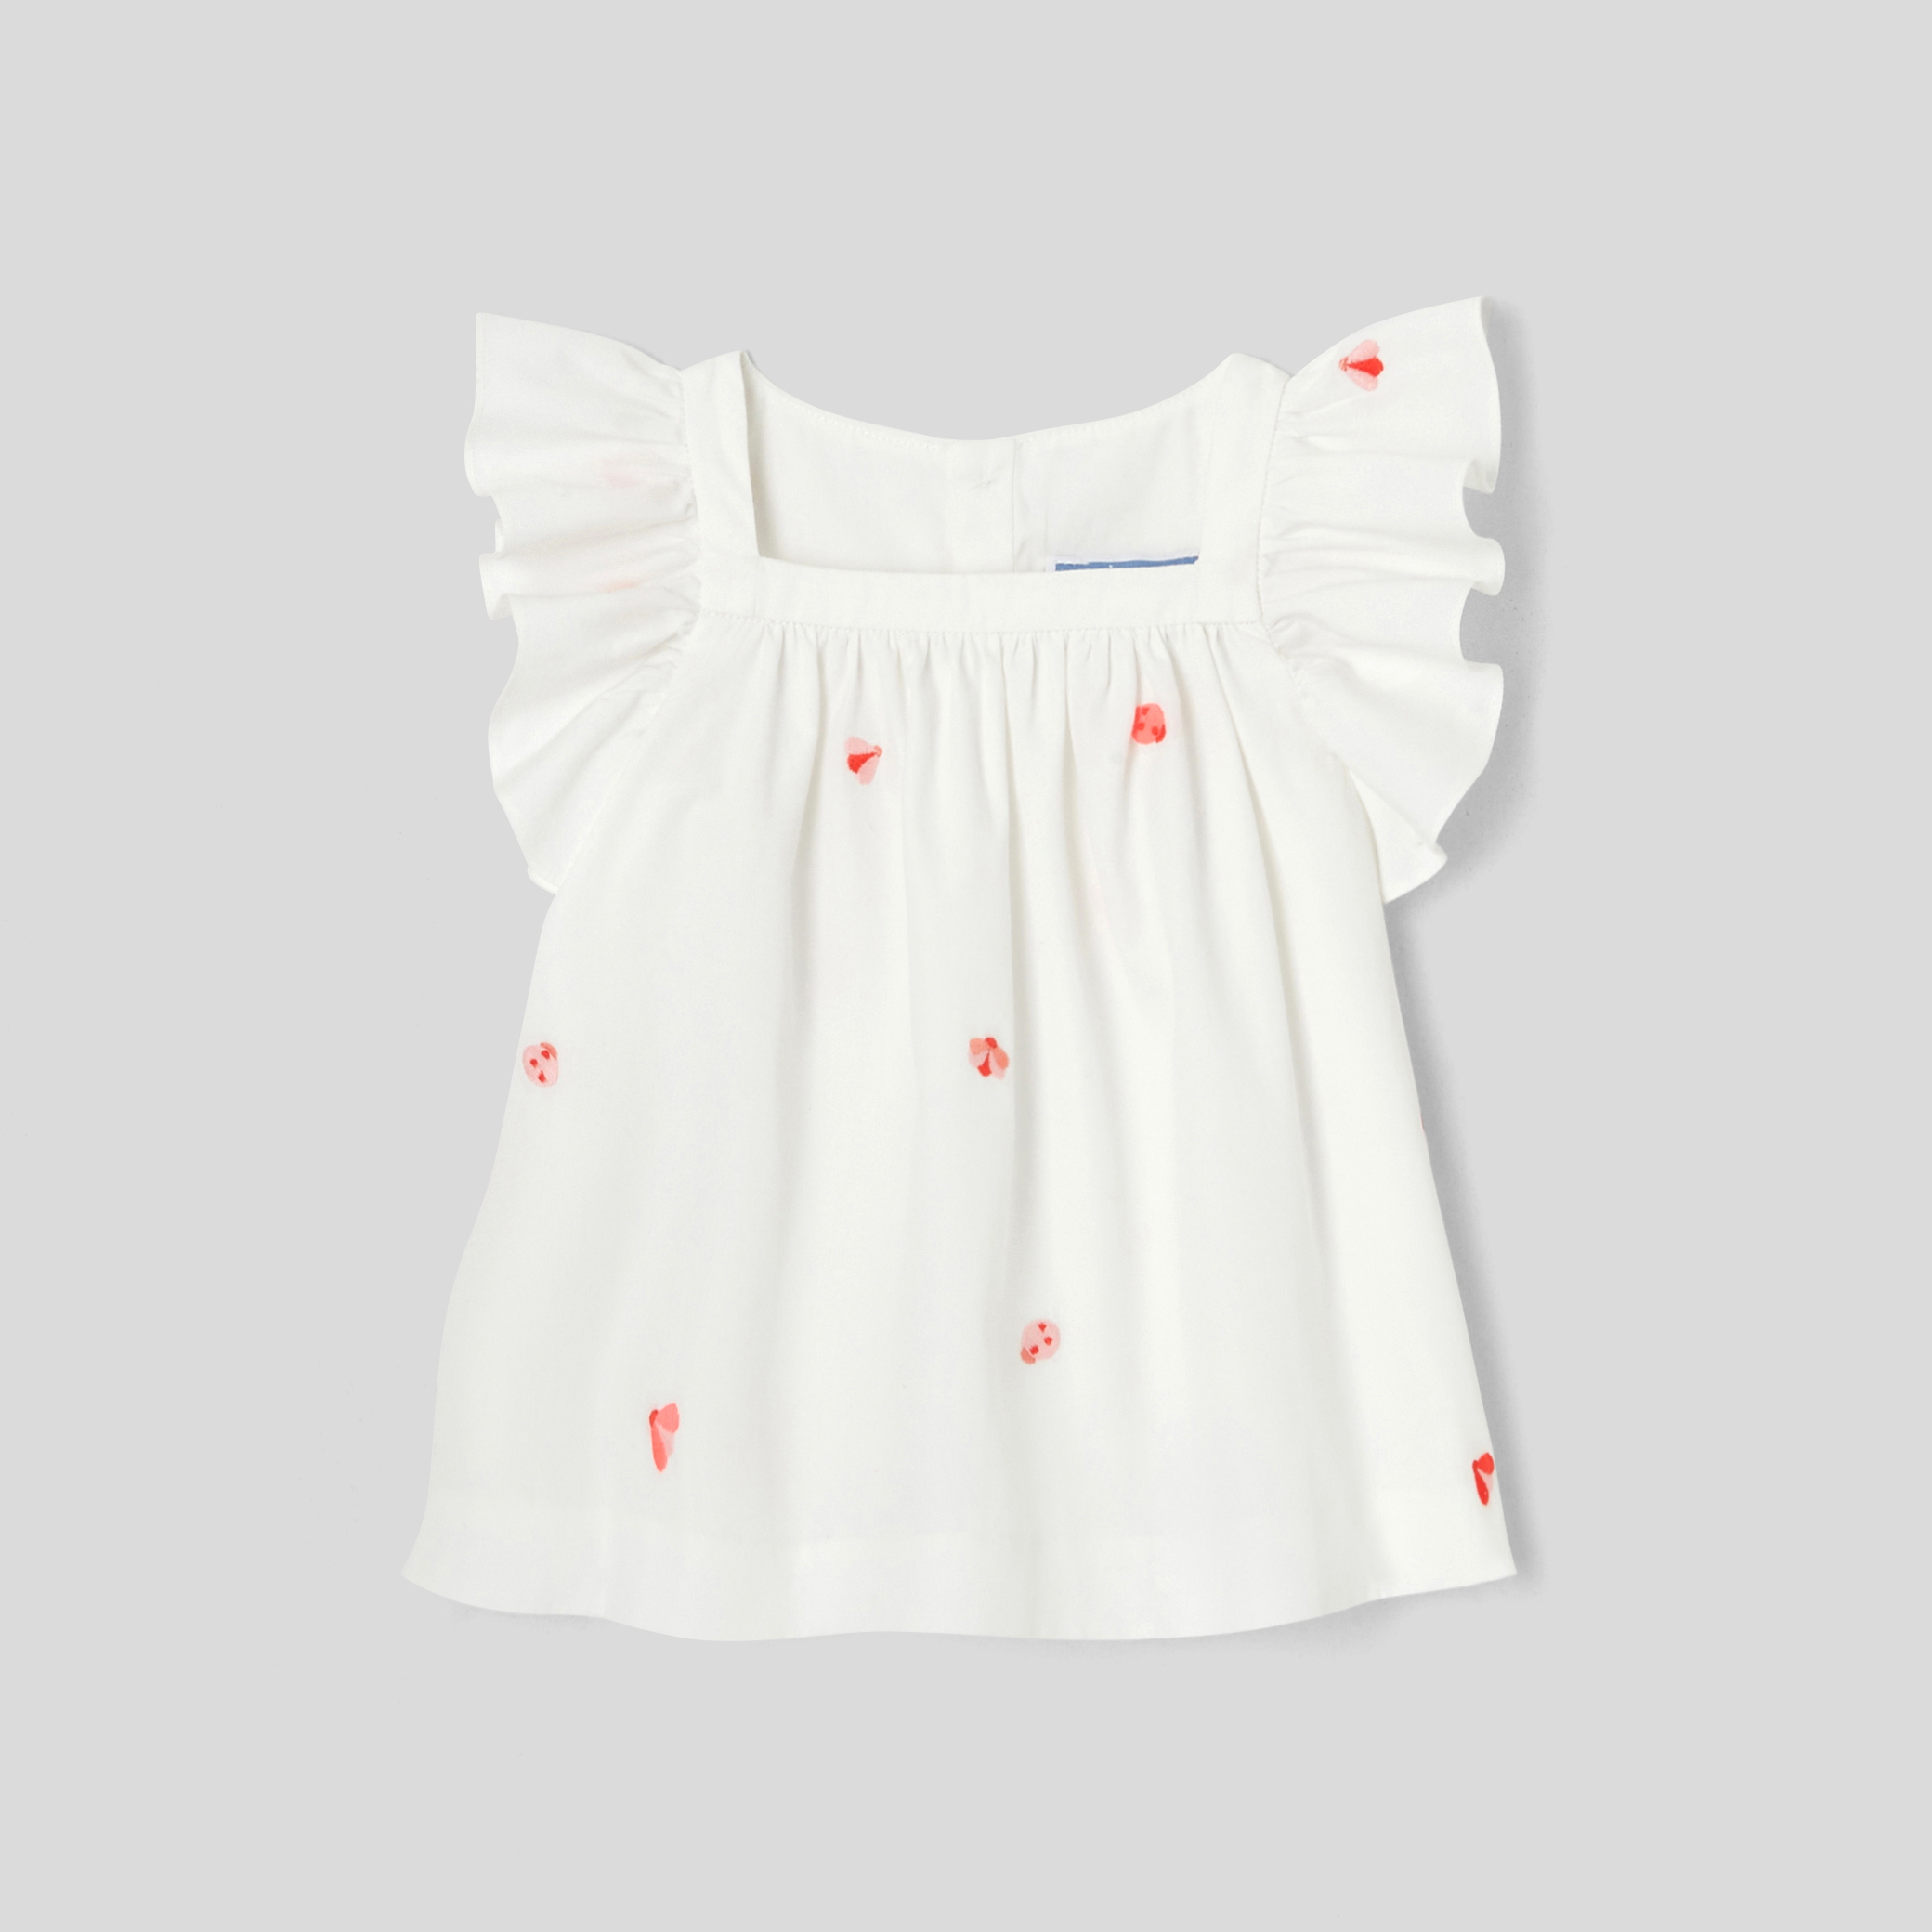 Toddler girl blouse with ladybug pattern